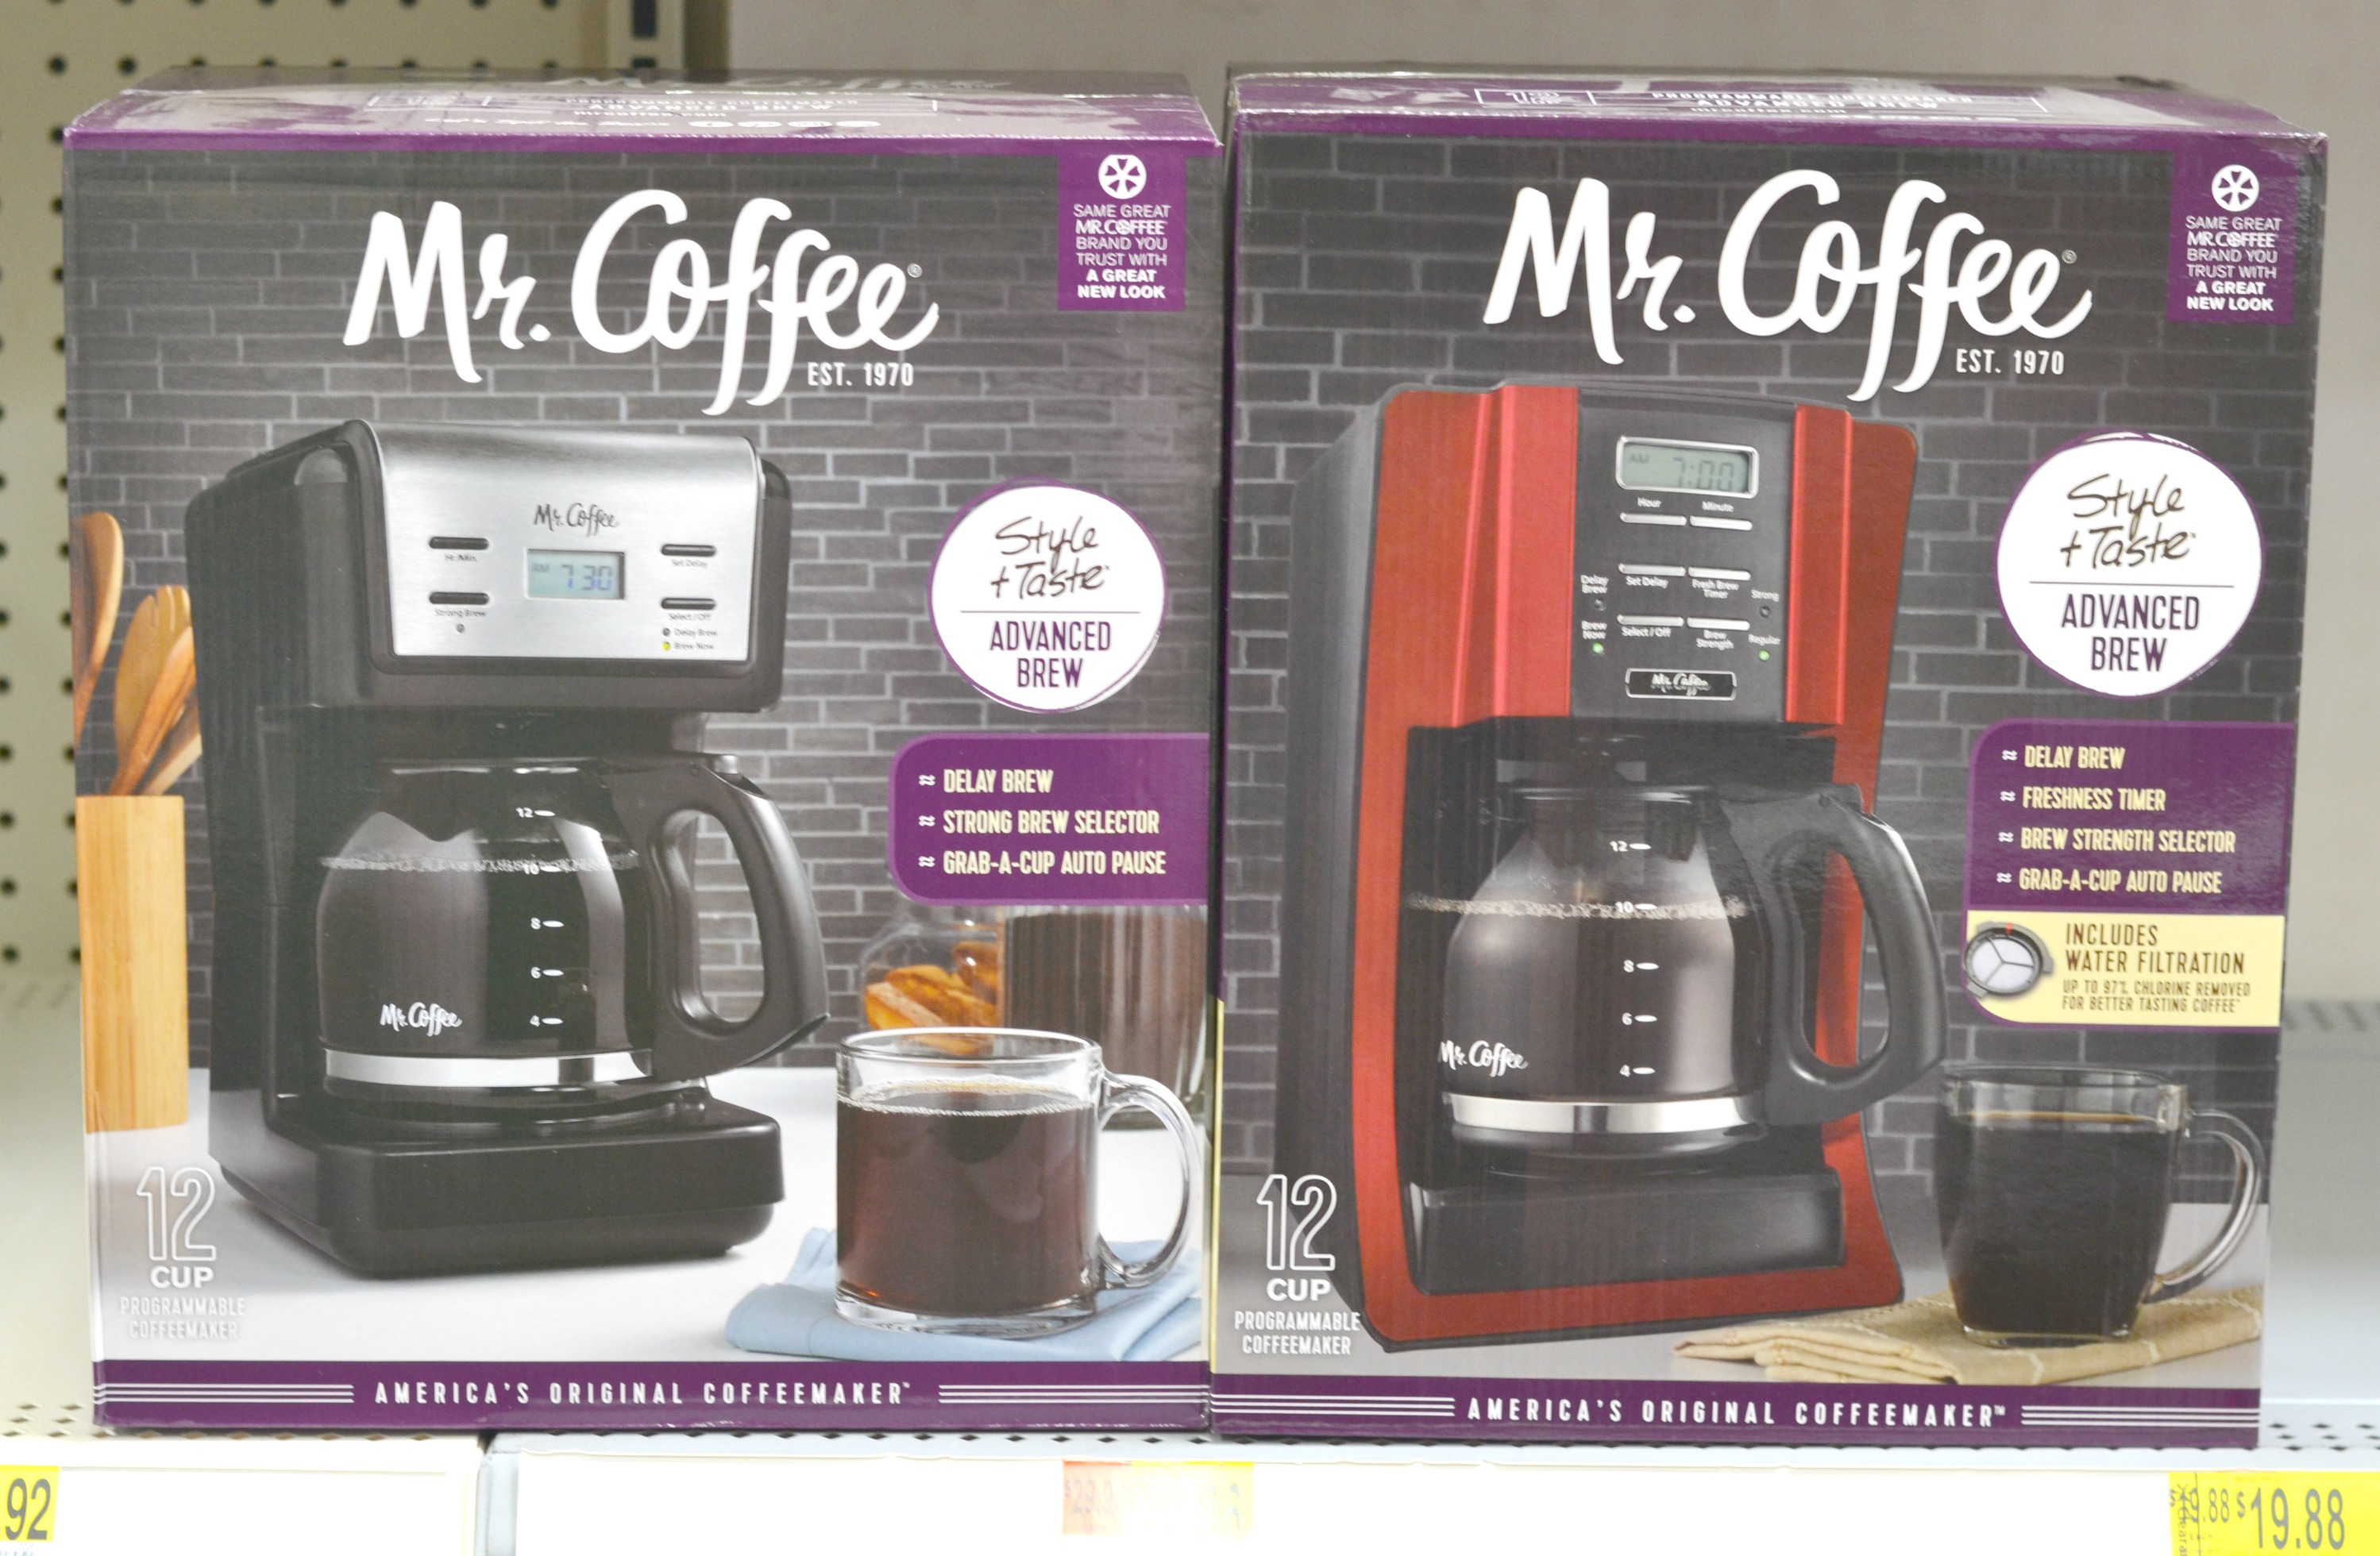 Mr. Coffee and Walmart